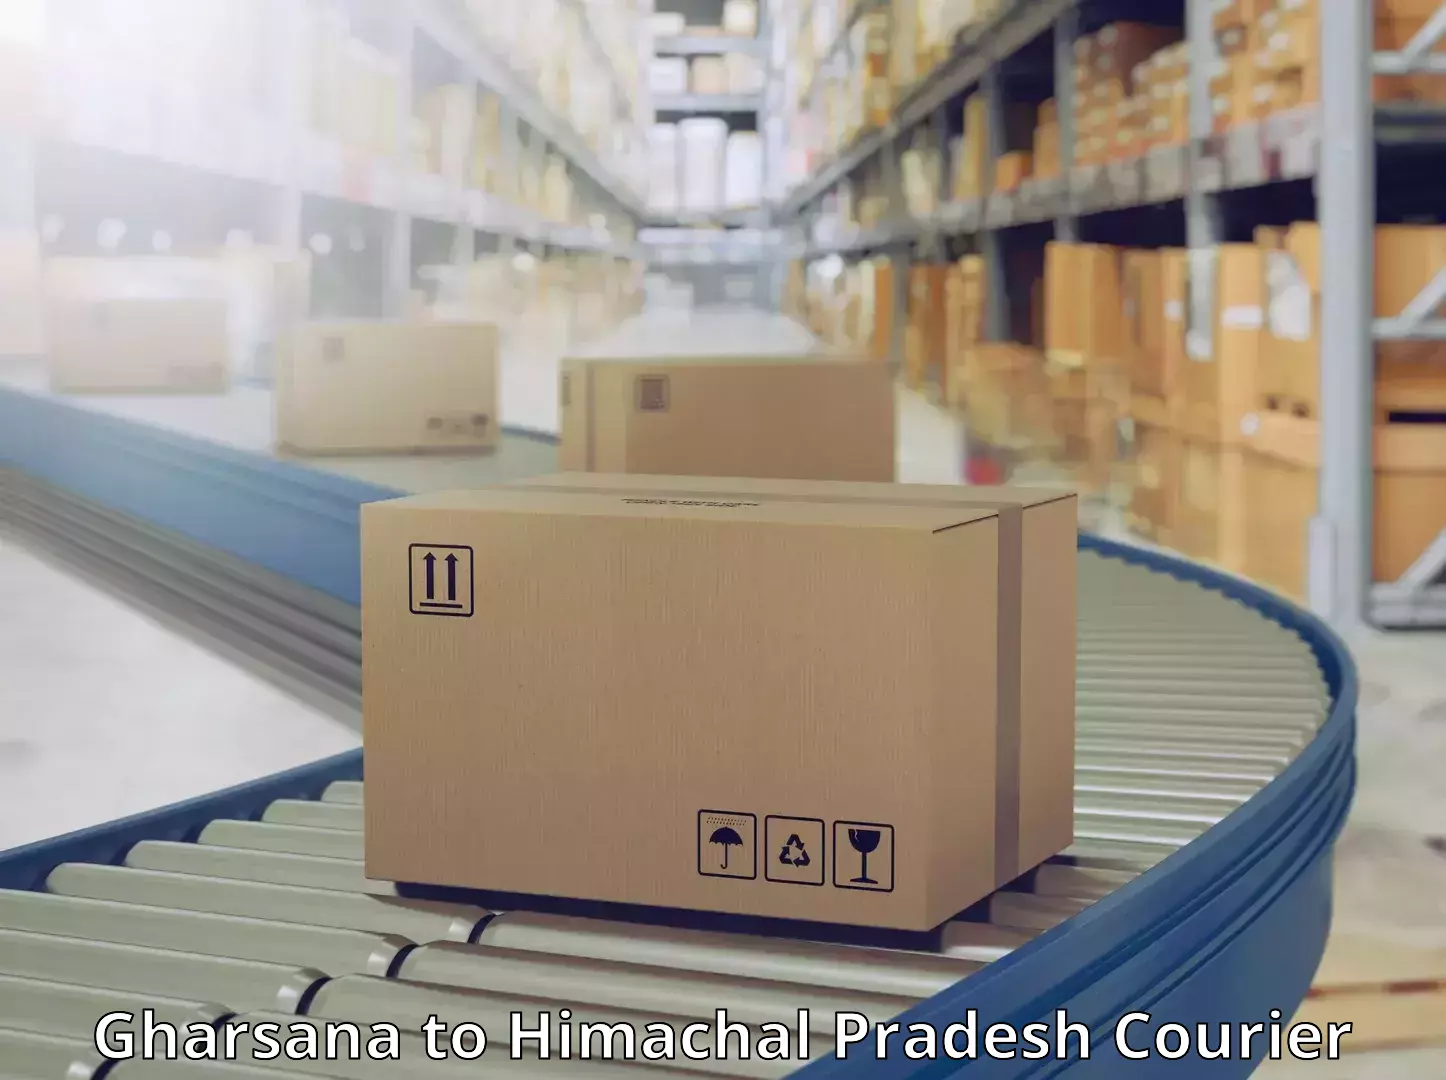 Modern delivery technologies Gharsana to Himachal Pradesh